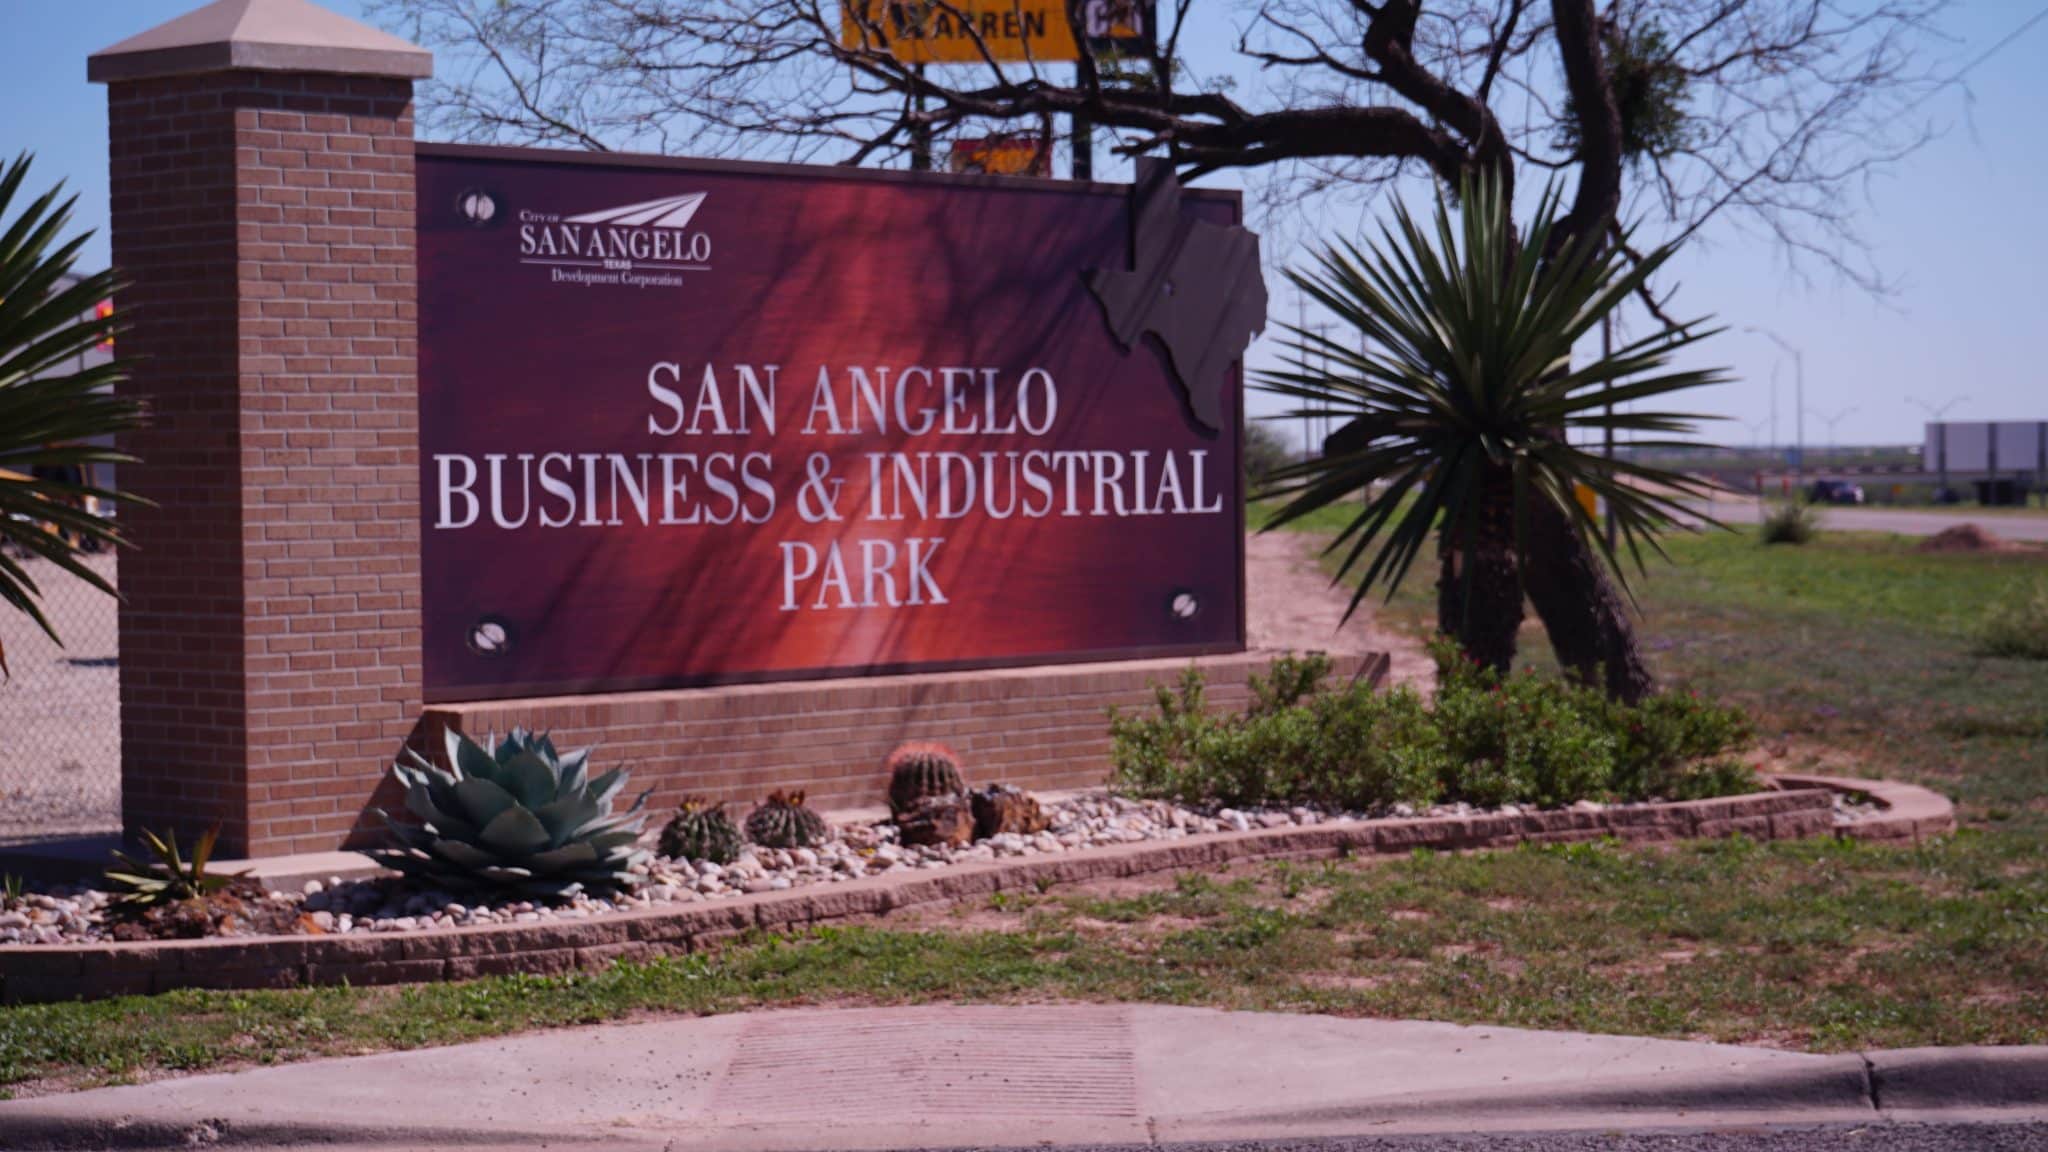 Business & Industrial Park